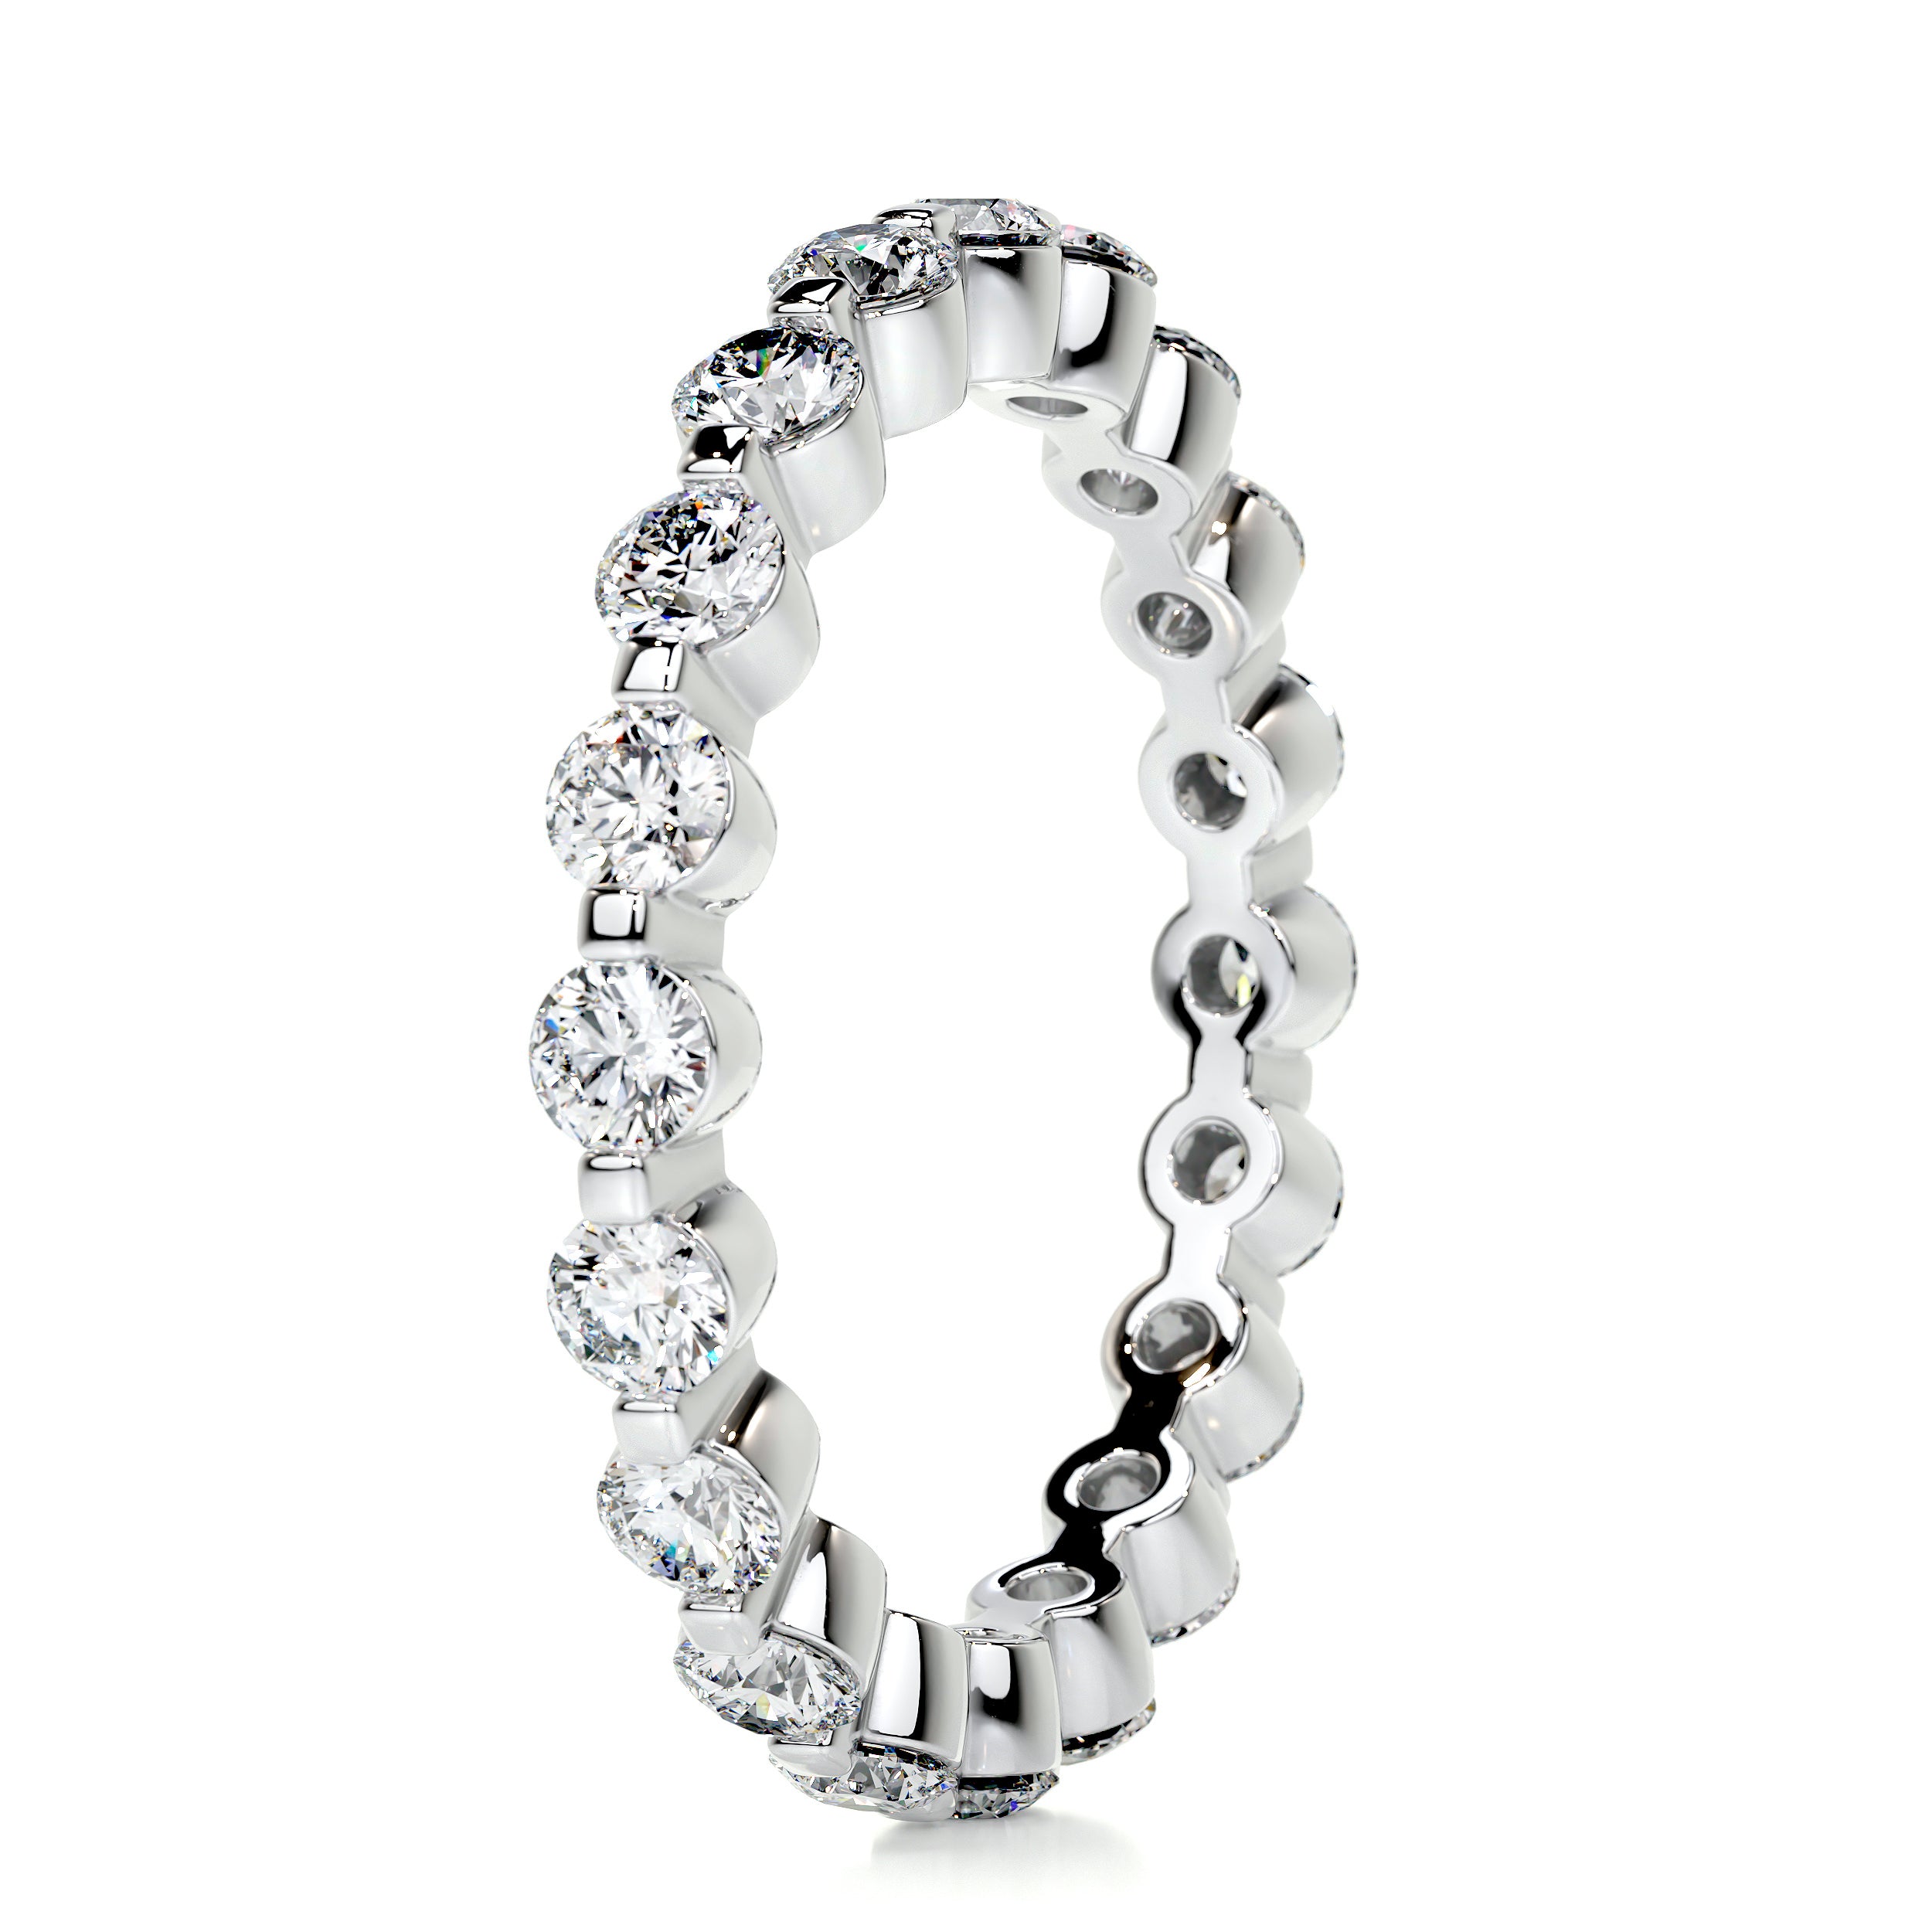 Josie Eternity Wedding Ring   (1.75 Carat) -14K White Gold